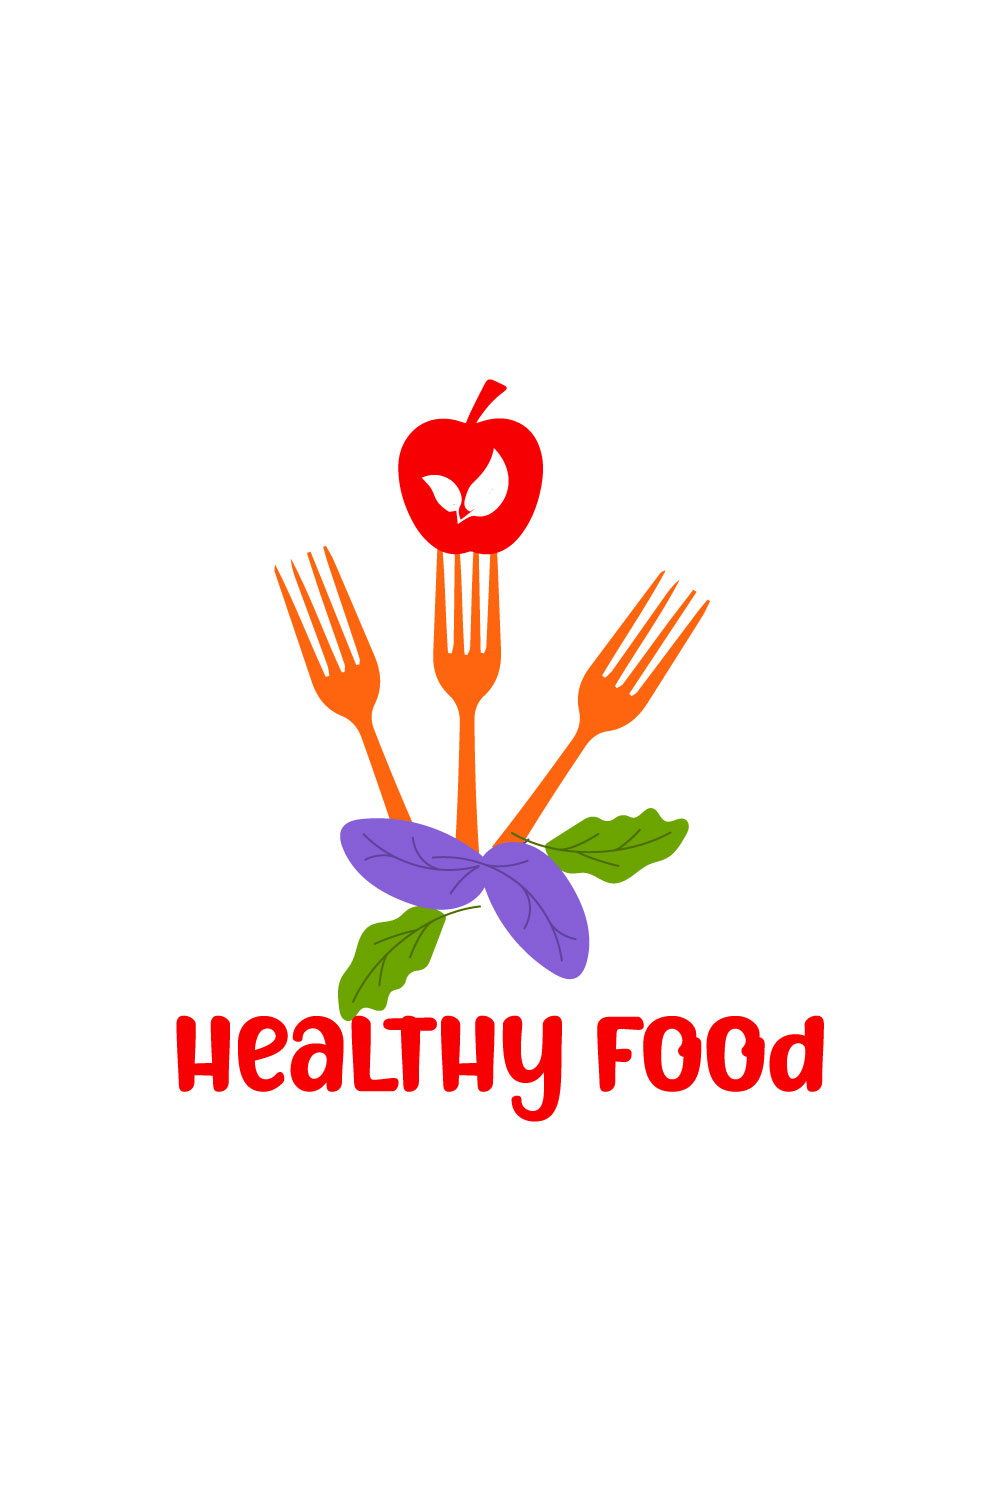 Free Better Health, Better Life logo pinterest preview image.